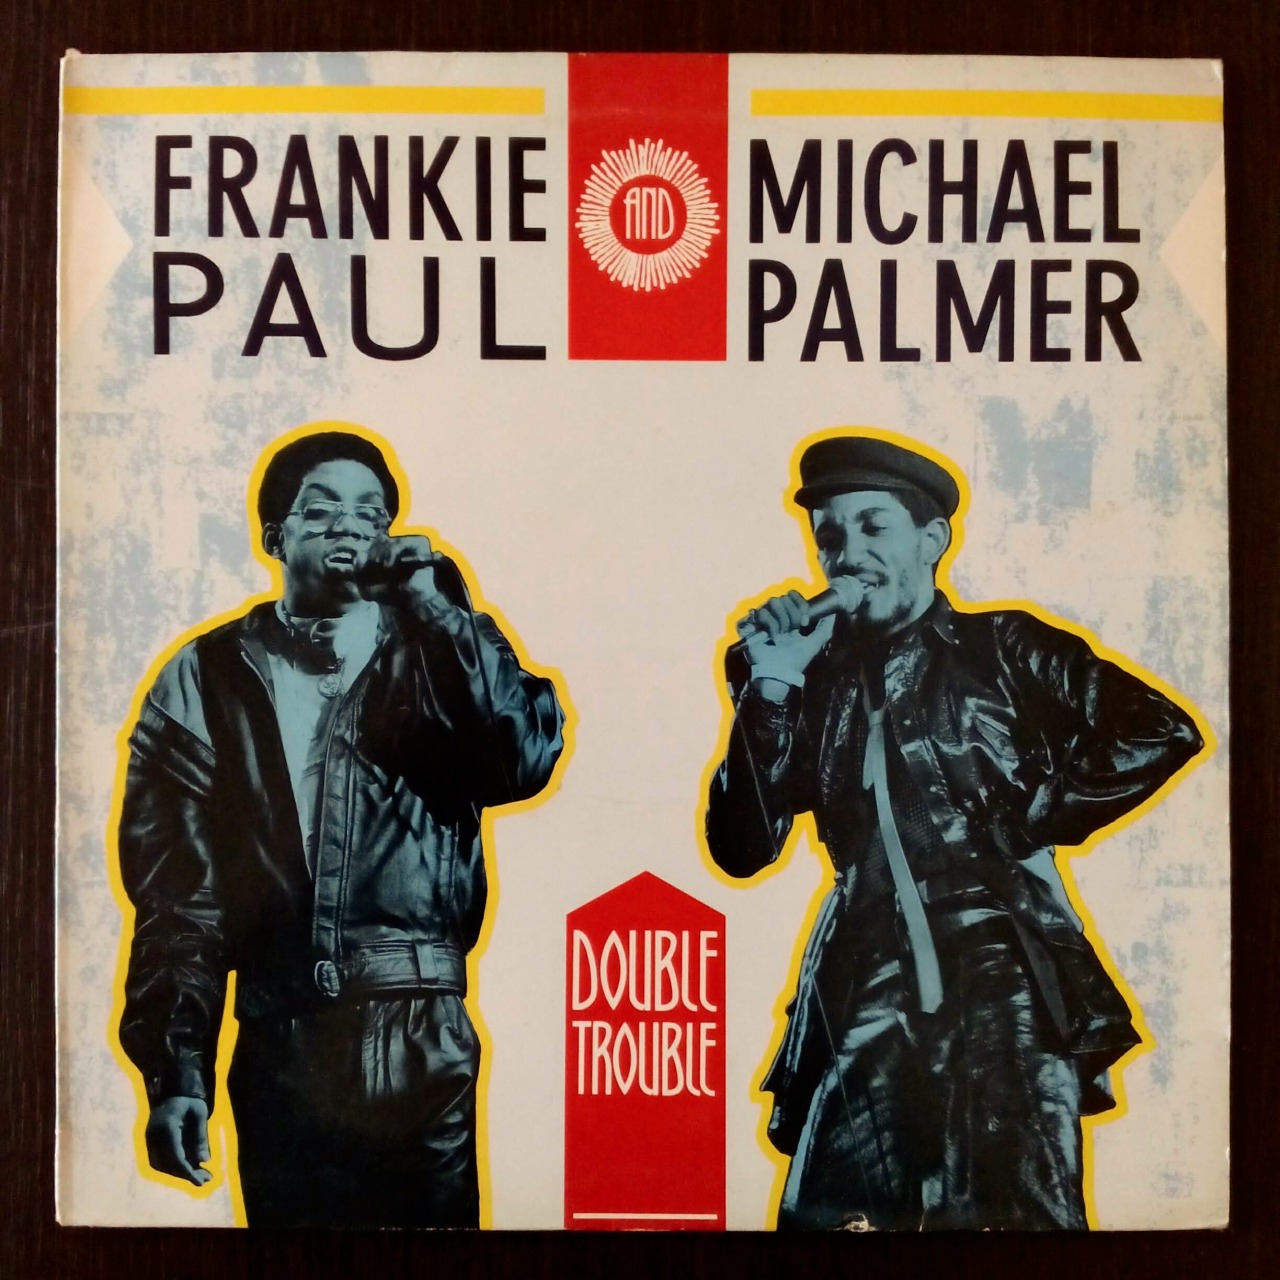 Frankie Paul And Michael Palmer - Double Trouble //
LP Sello: Greensleeves Records - GREL 77 // 
Edicion Original UK - 1985 
========== 
Backing Band - Hi-Times Band 
Producer - Prince Jammy 
==== 
LP Vinilo Segunda Mano
=== 
Vinilo: (VG+)
Portada: VG+
============ 
13€
============ #lp#dancehall#1980s#ofertas#frankie paul#michael palmer#greensleeves records#prince jammy